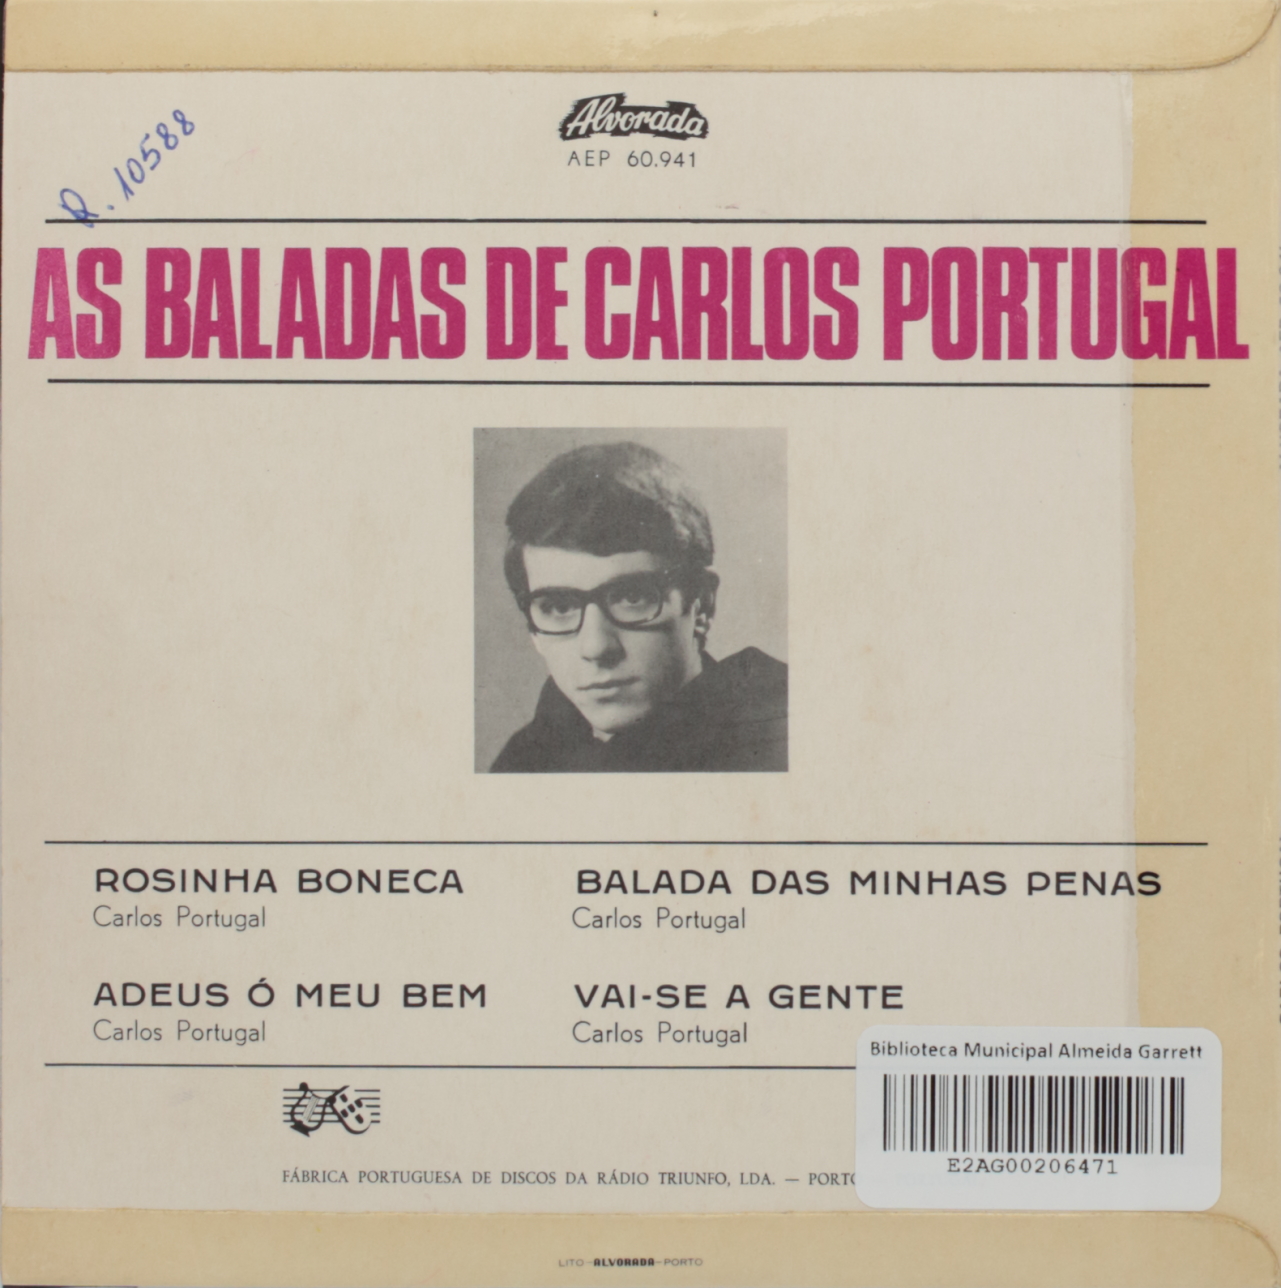 As baladas de Carlos Portugal